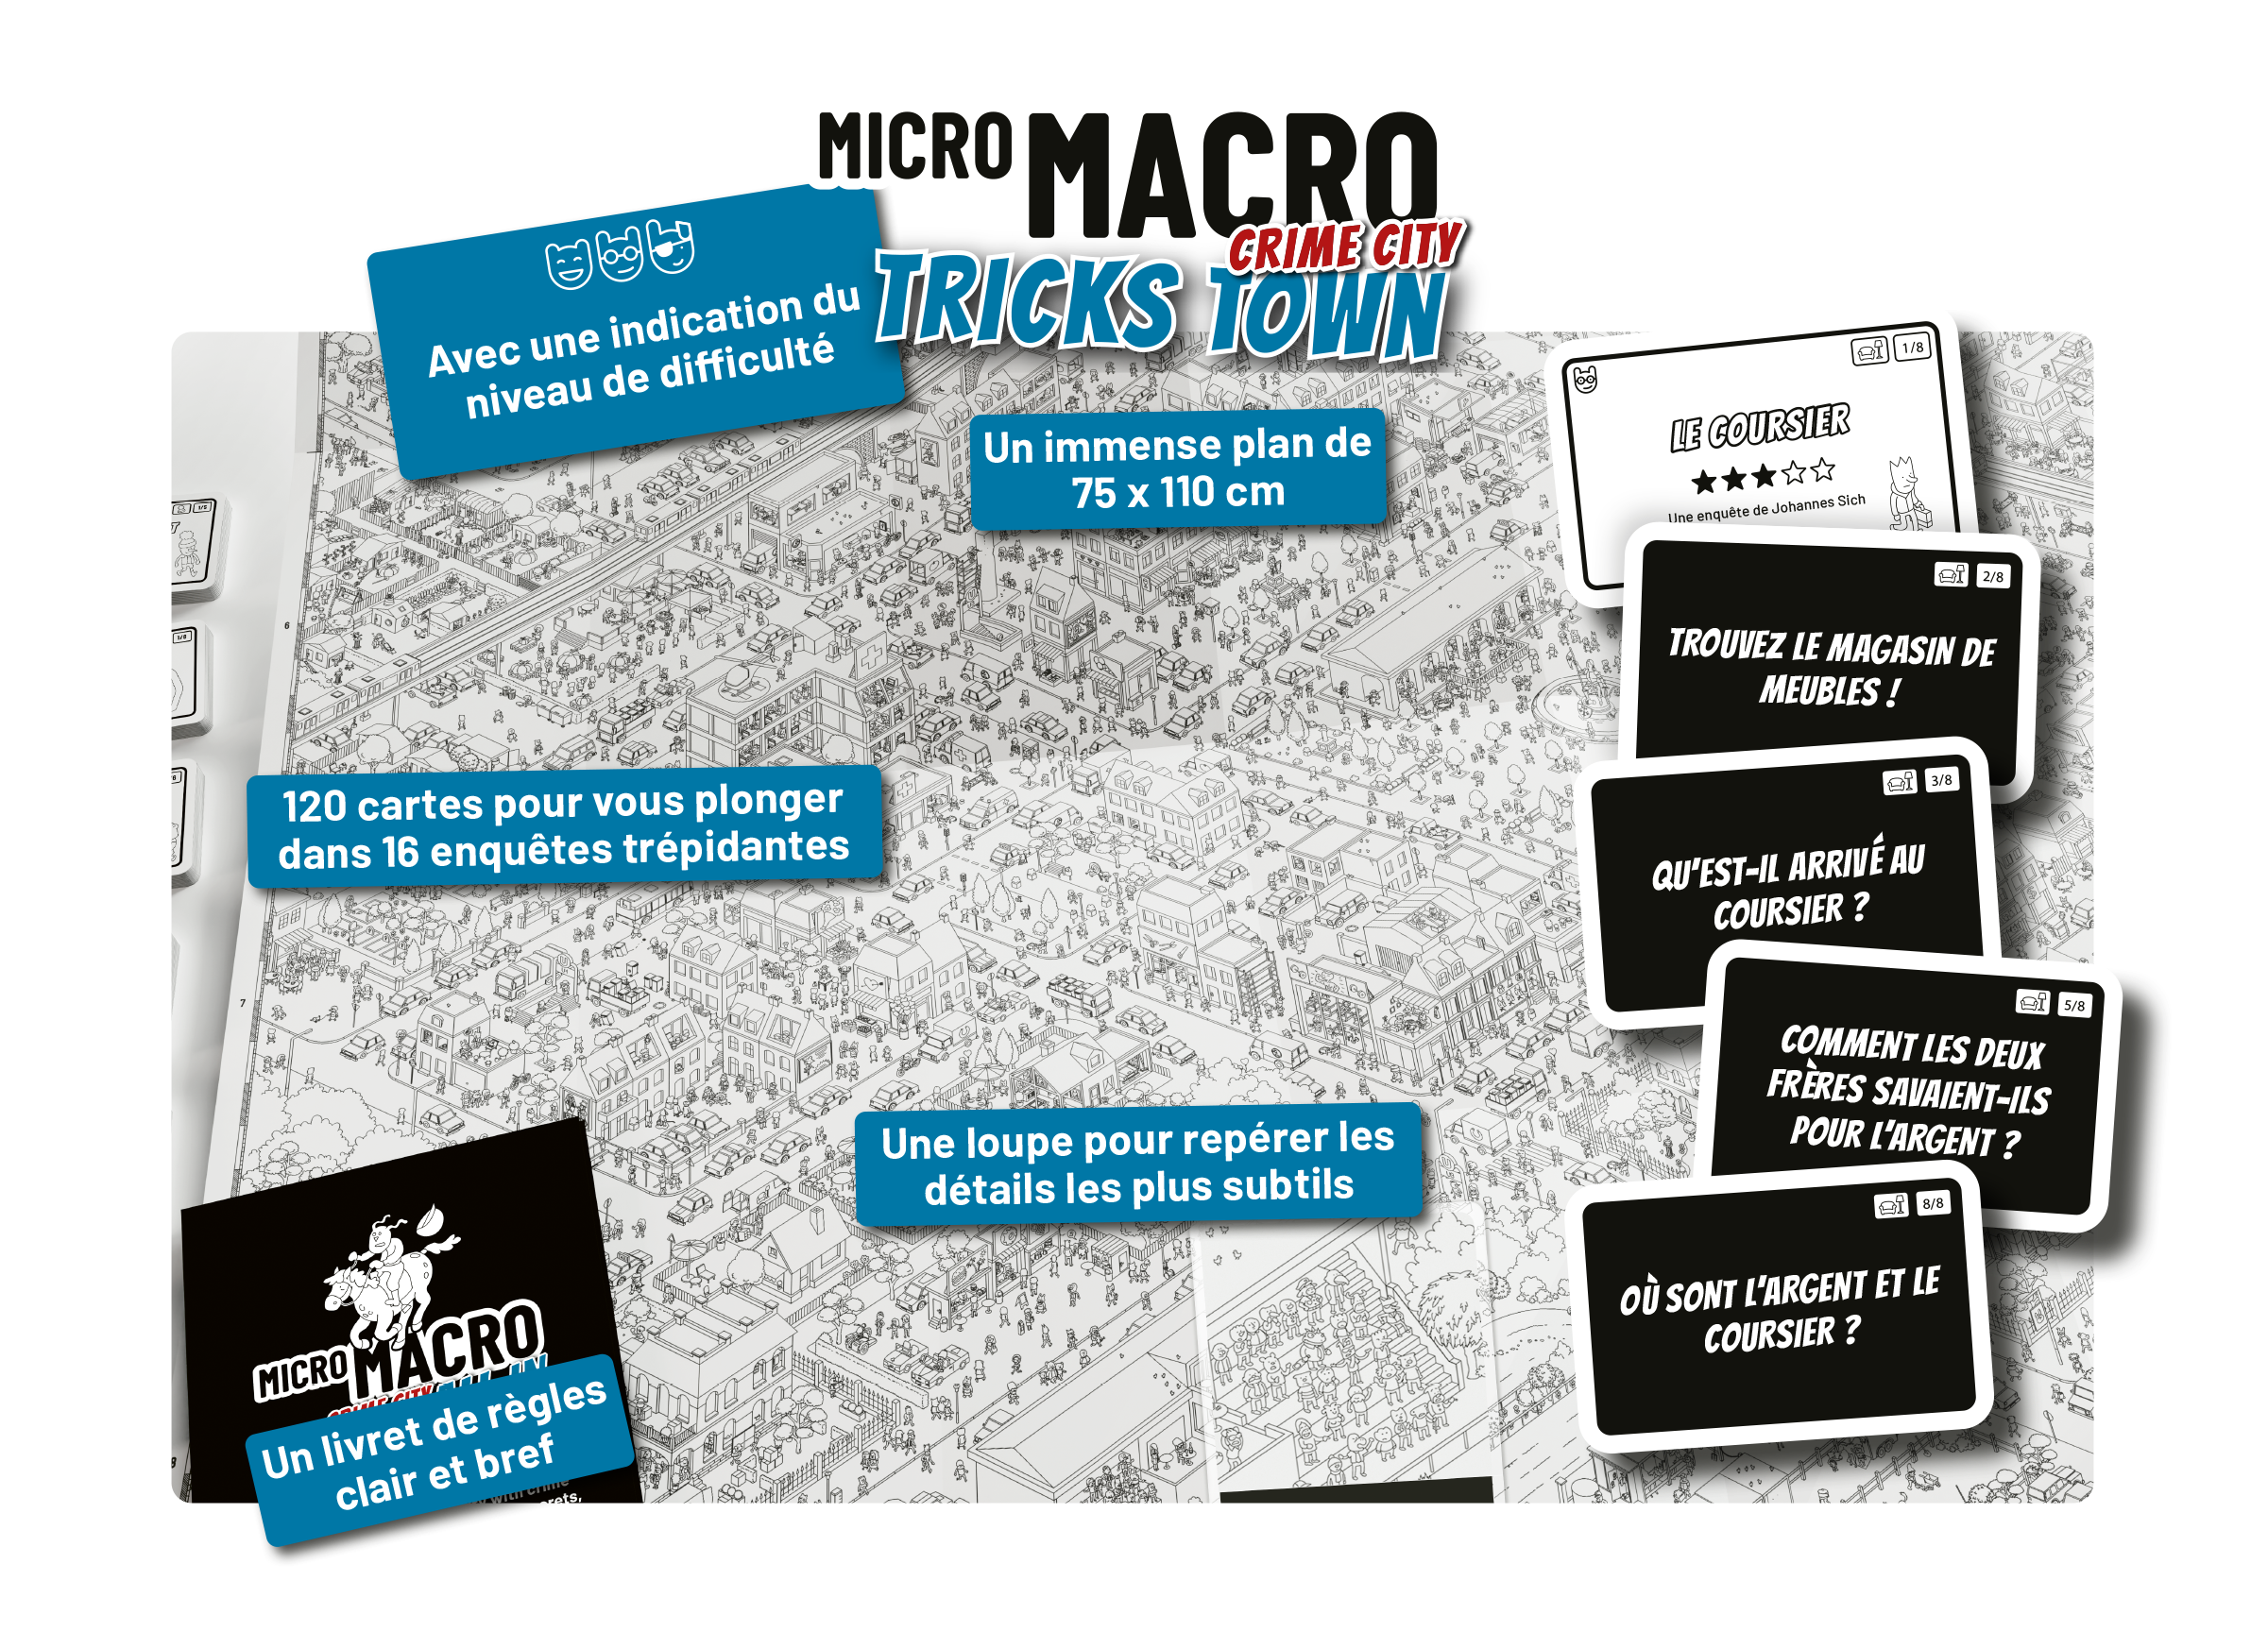 Micro Macro 3 / Tricks town